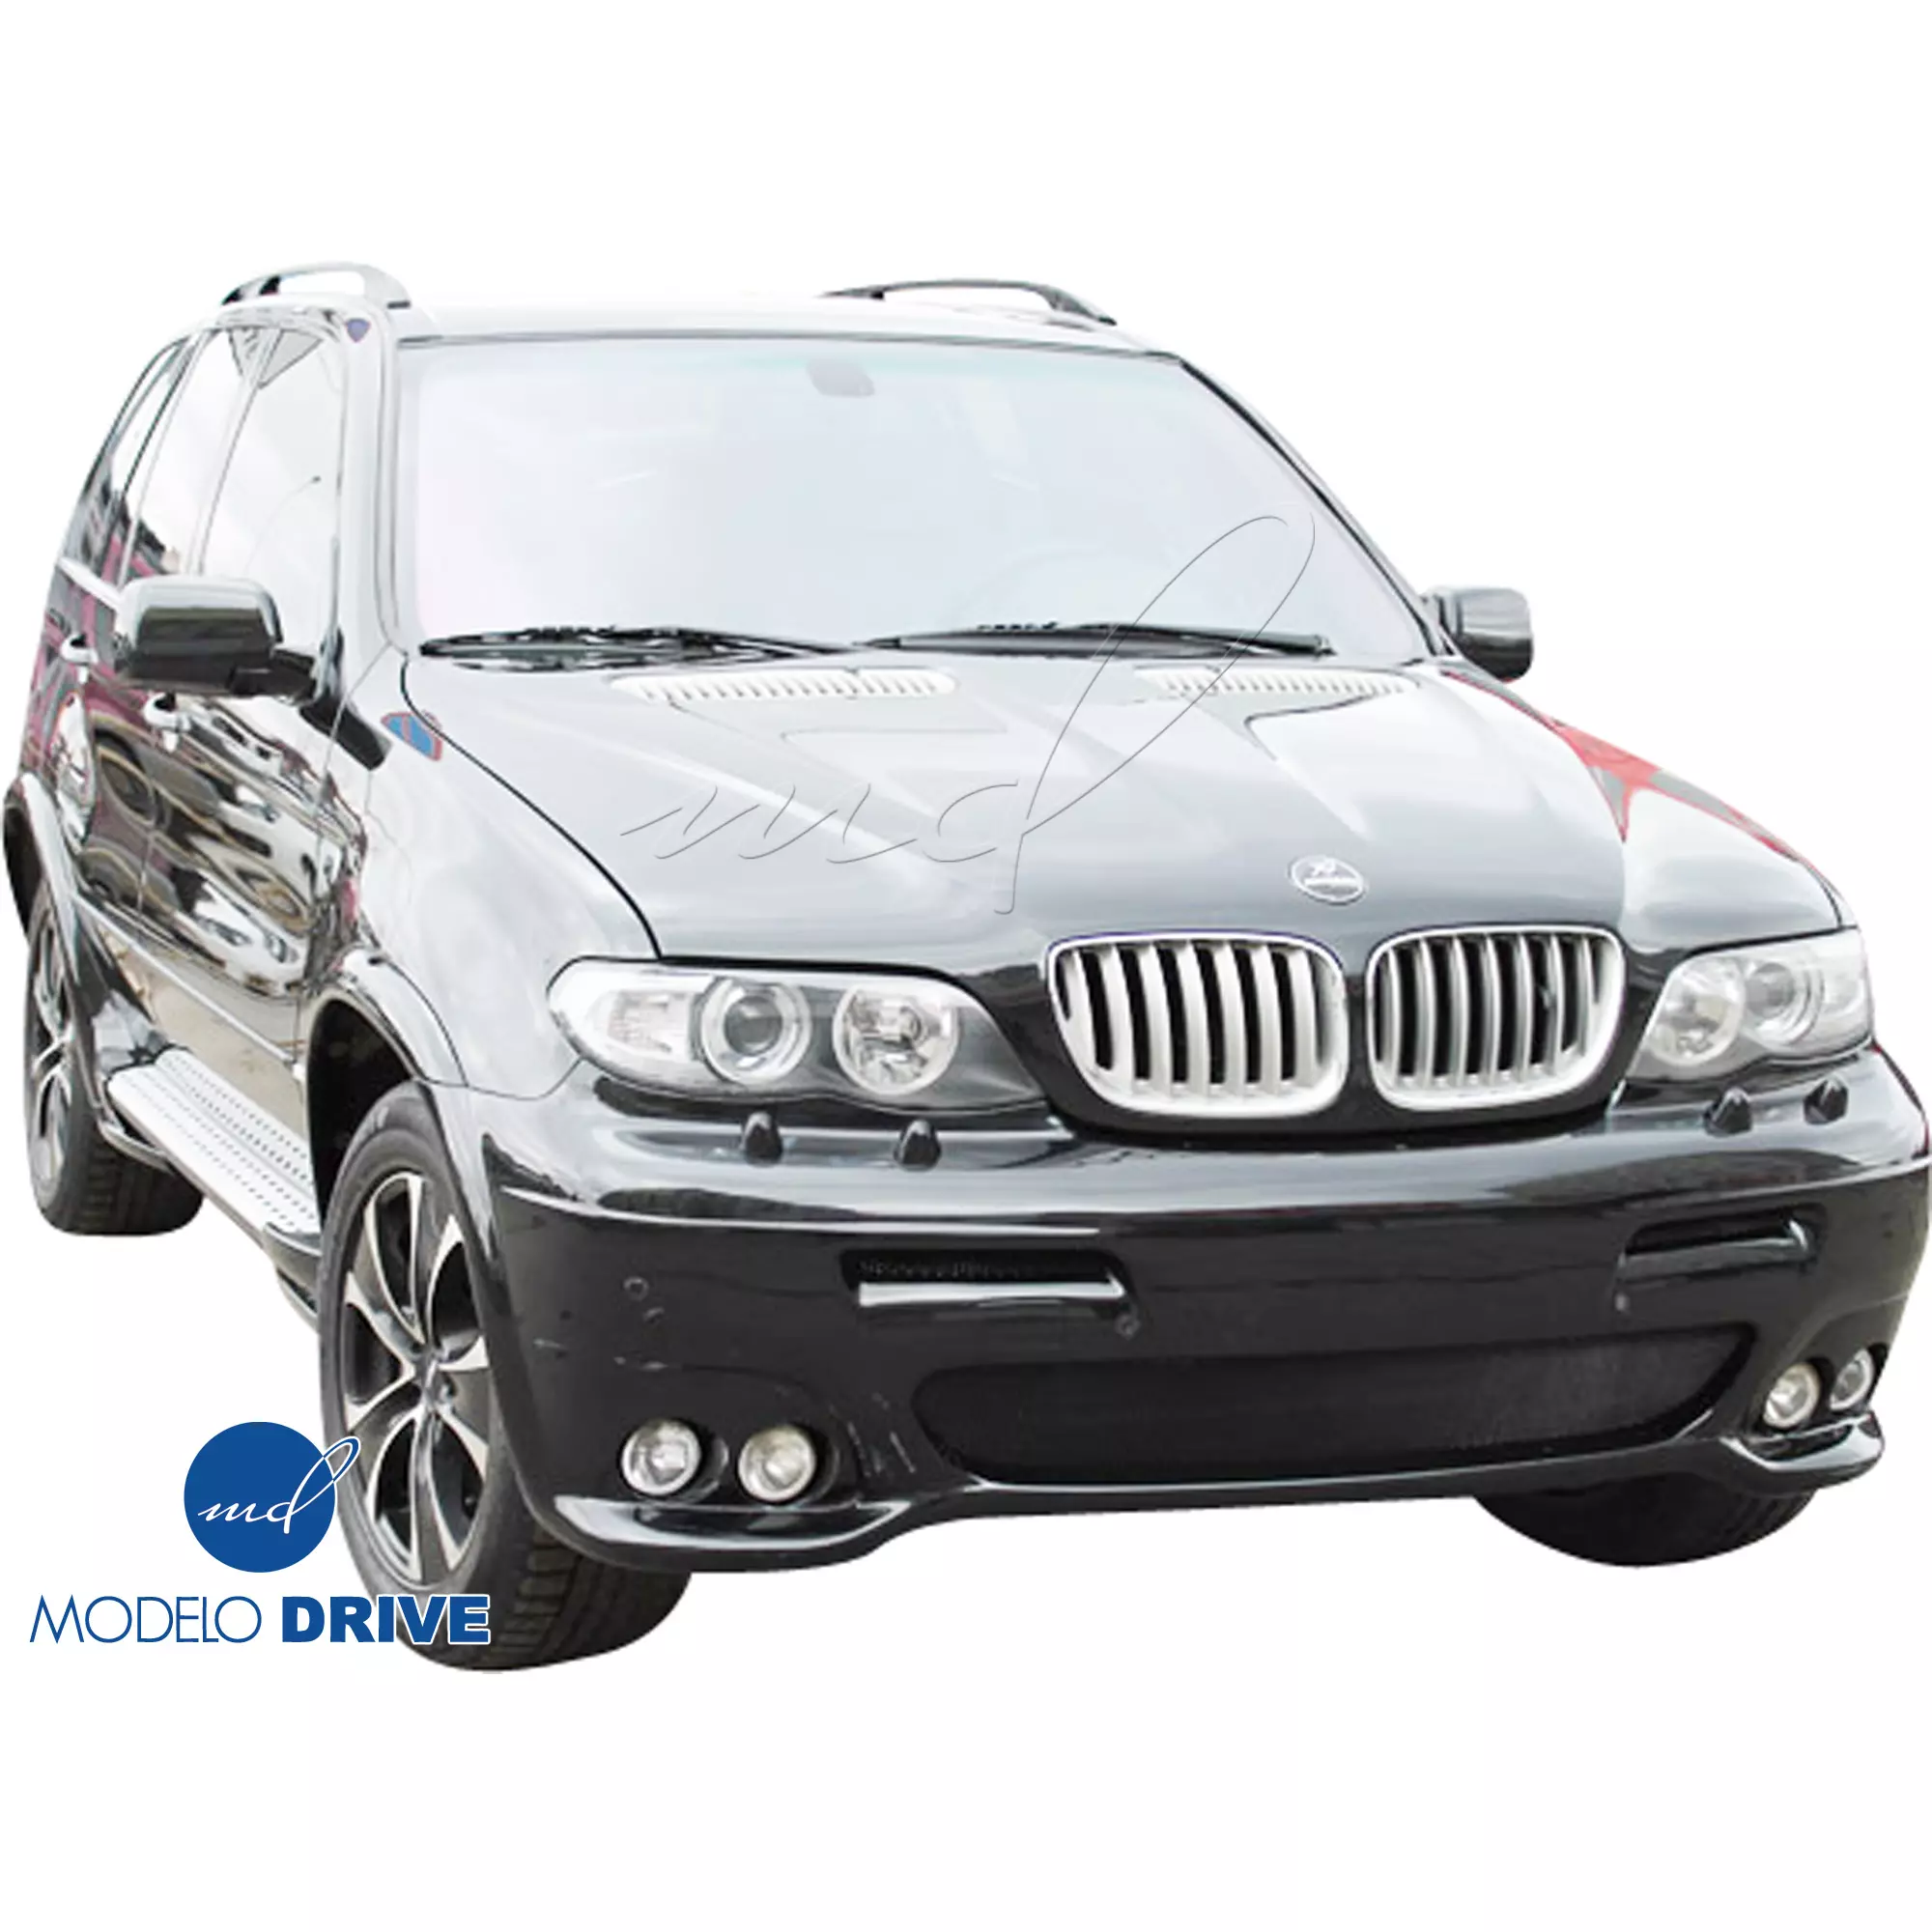 ModeloDrive FRP HAMA Front Bumper > BMW X5 E53 2000-2006 > 5dr - Image 11